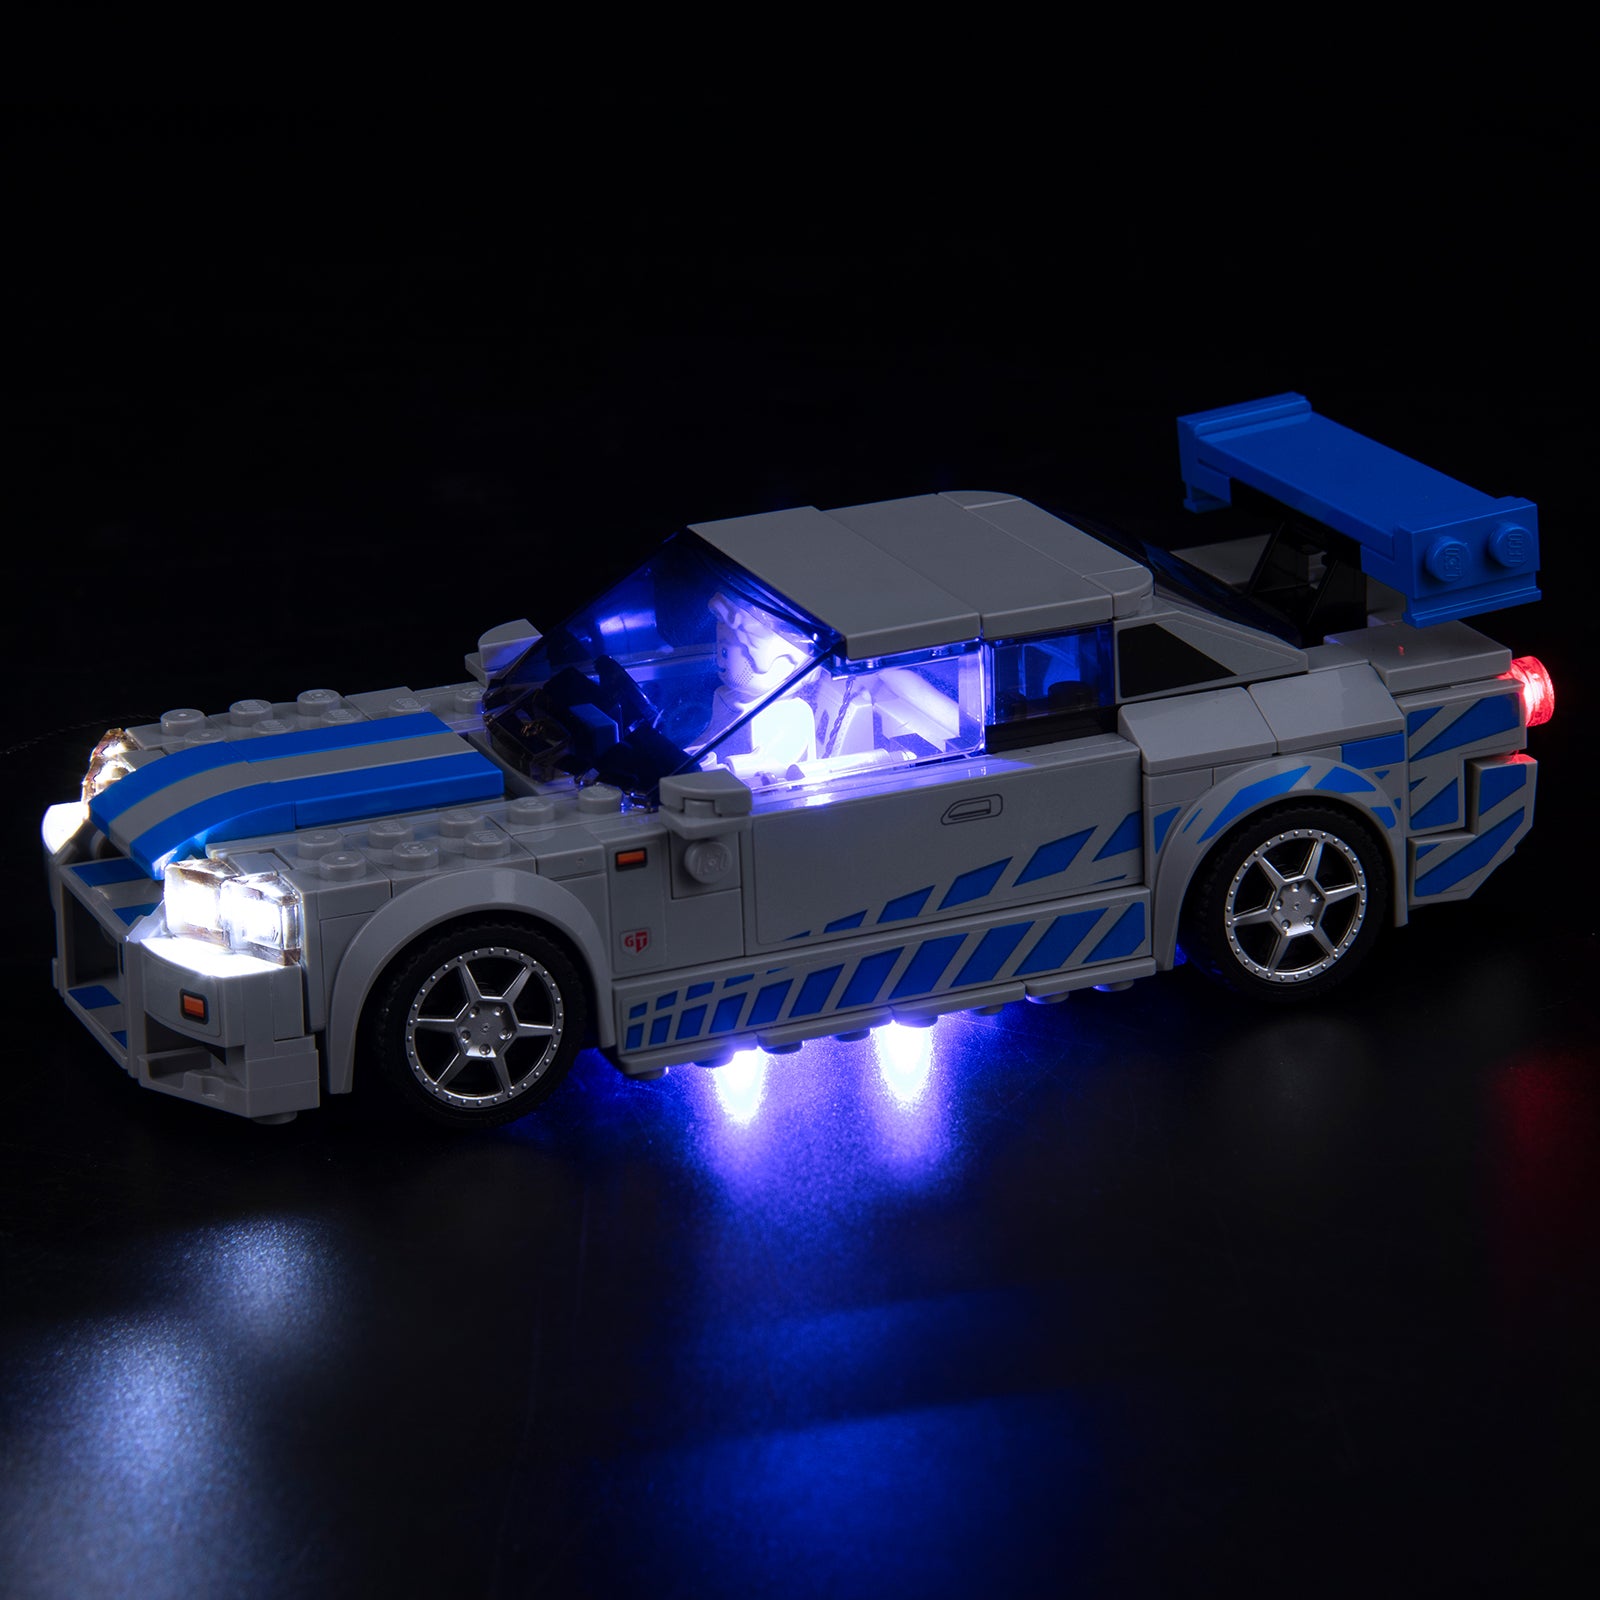 LEGO SPEED CHAMPIONS NISSAN SKYLINE GT-R R34 2 FAST 2 FURIOUS 76917